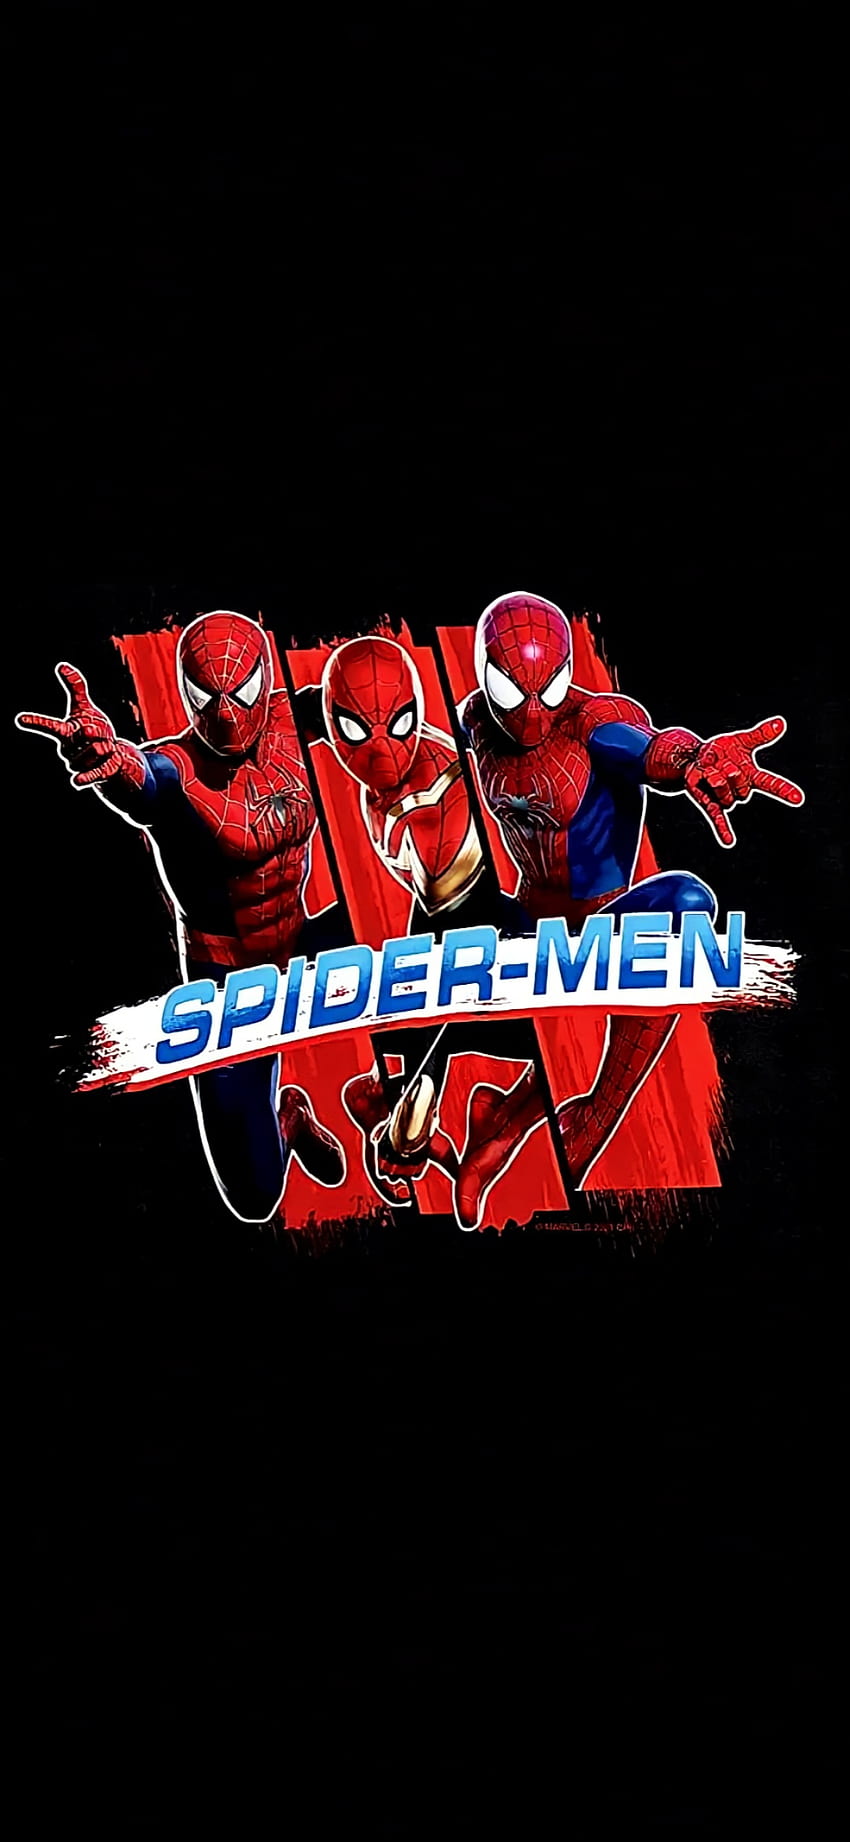 Spider-Men NWH, Spider-Man, Tobey Maguire, Tidak ada jalan pulang, Spider man, Tom Holland, Andrew Garfield, Spidermen, Spiderverse, Marvel, Spiderman wallpaper ponsel HD